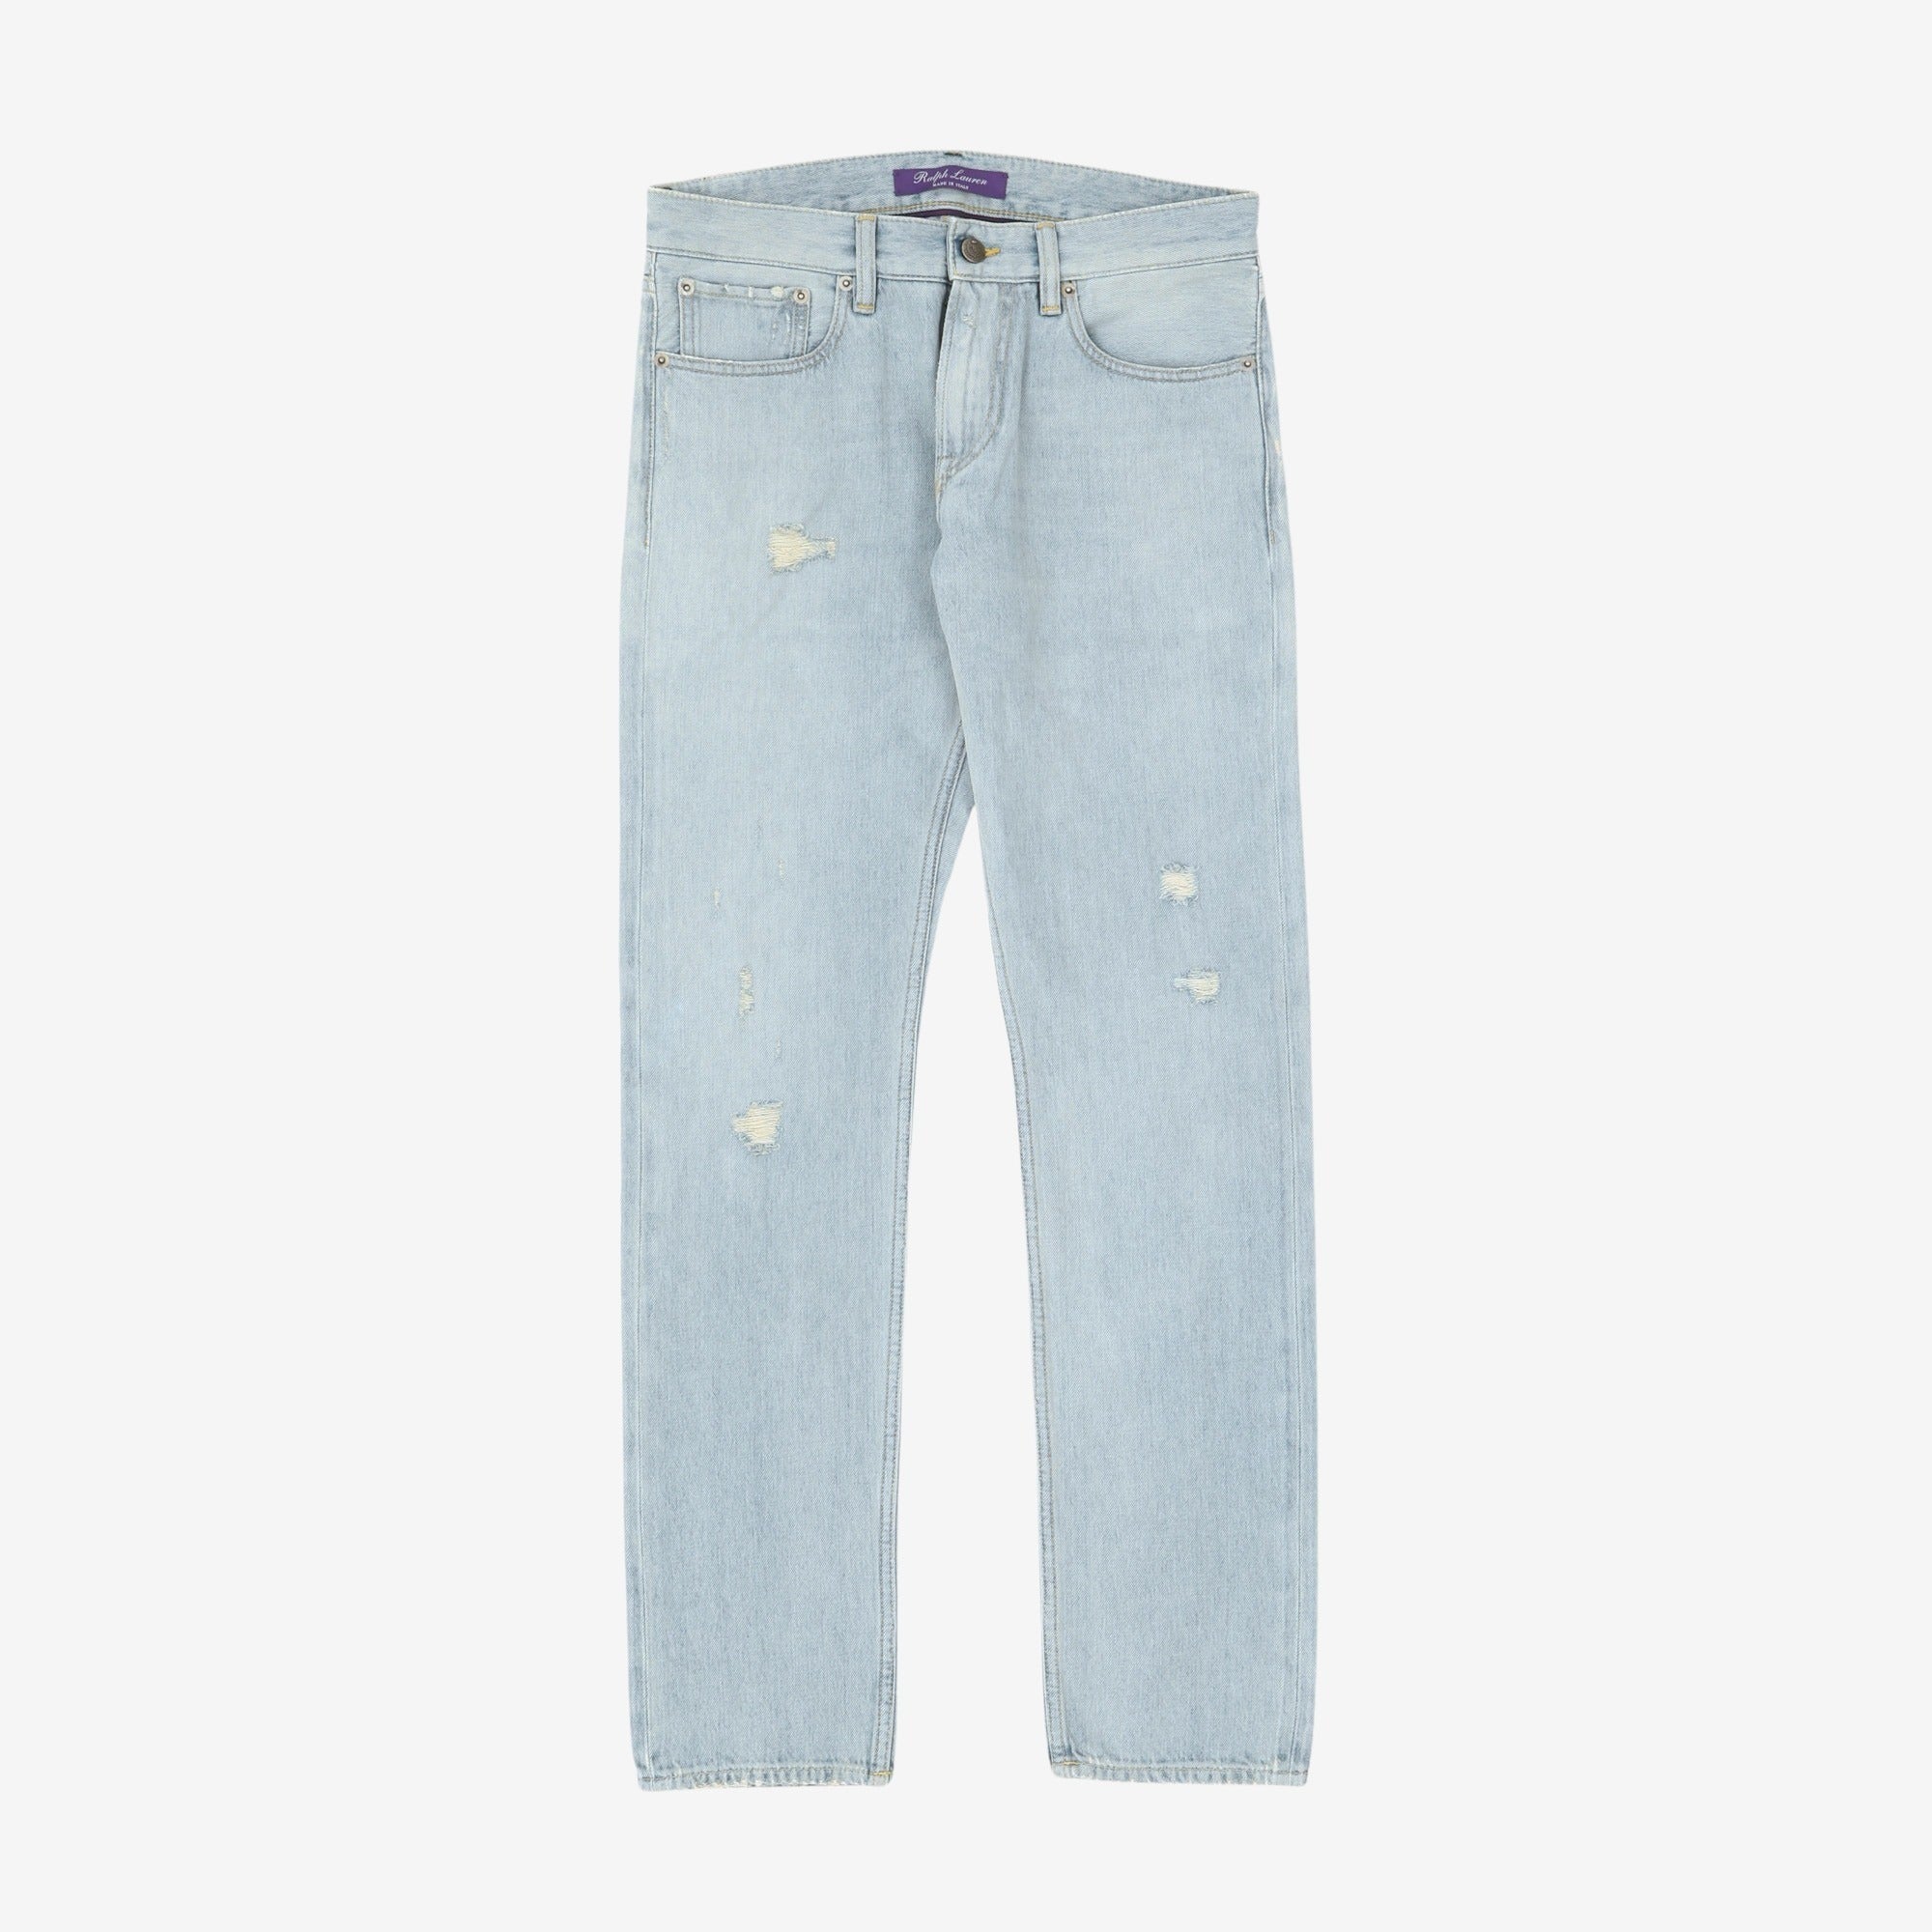 Purple Label 5 Pocket Slim Fit Jeans